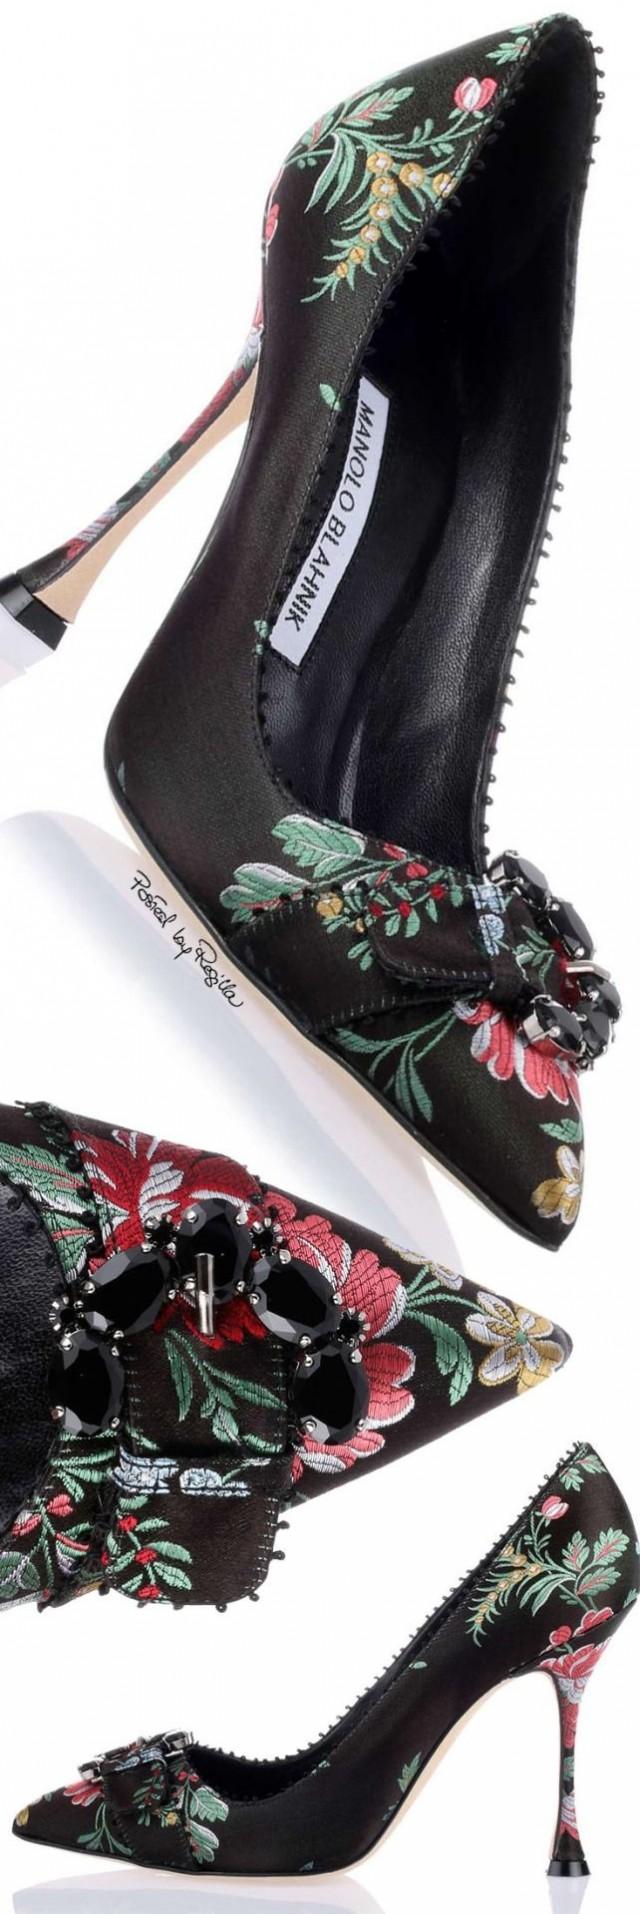 ℳiss Socialite's Shoes {a Peak Into Miss Socialite's Shoe Closet ...